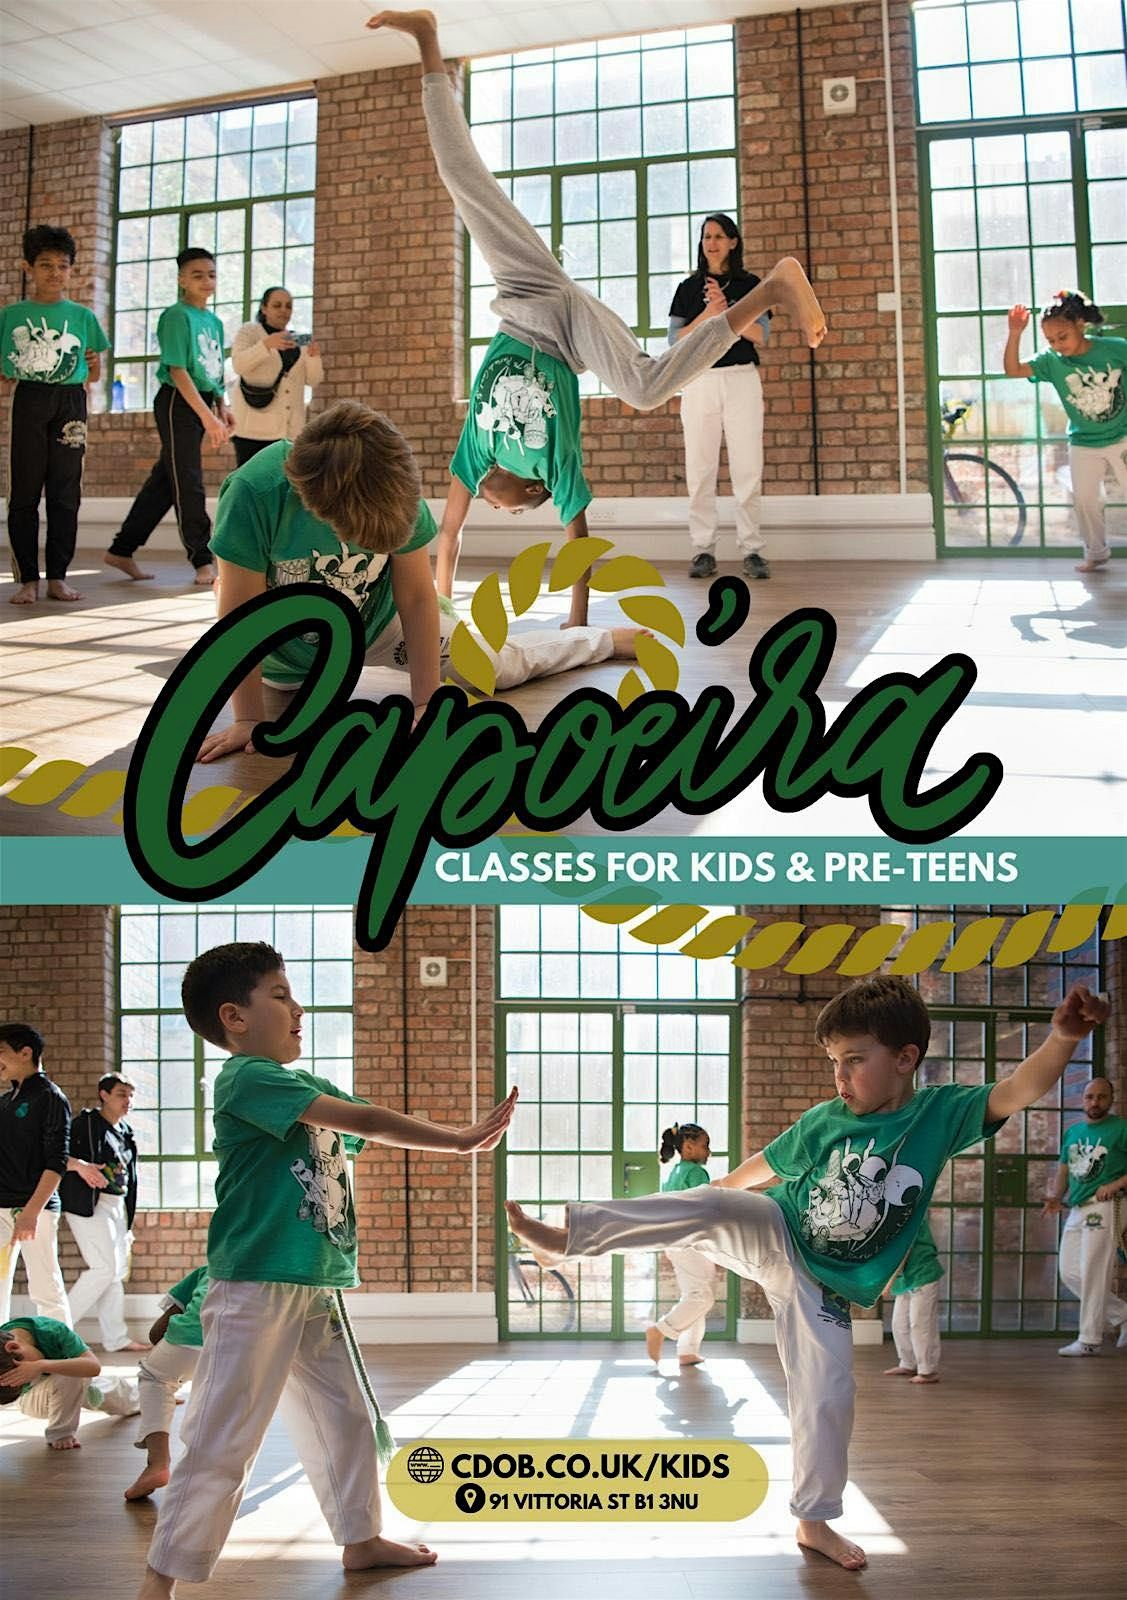 Trial Capoeira classes for Kids, pre-teens & teens - Birmingham